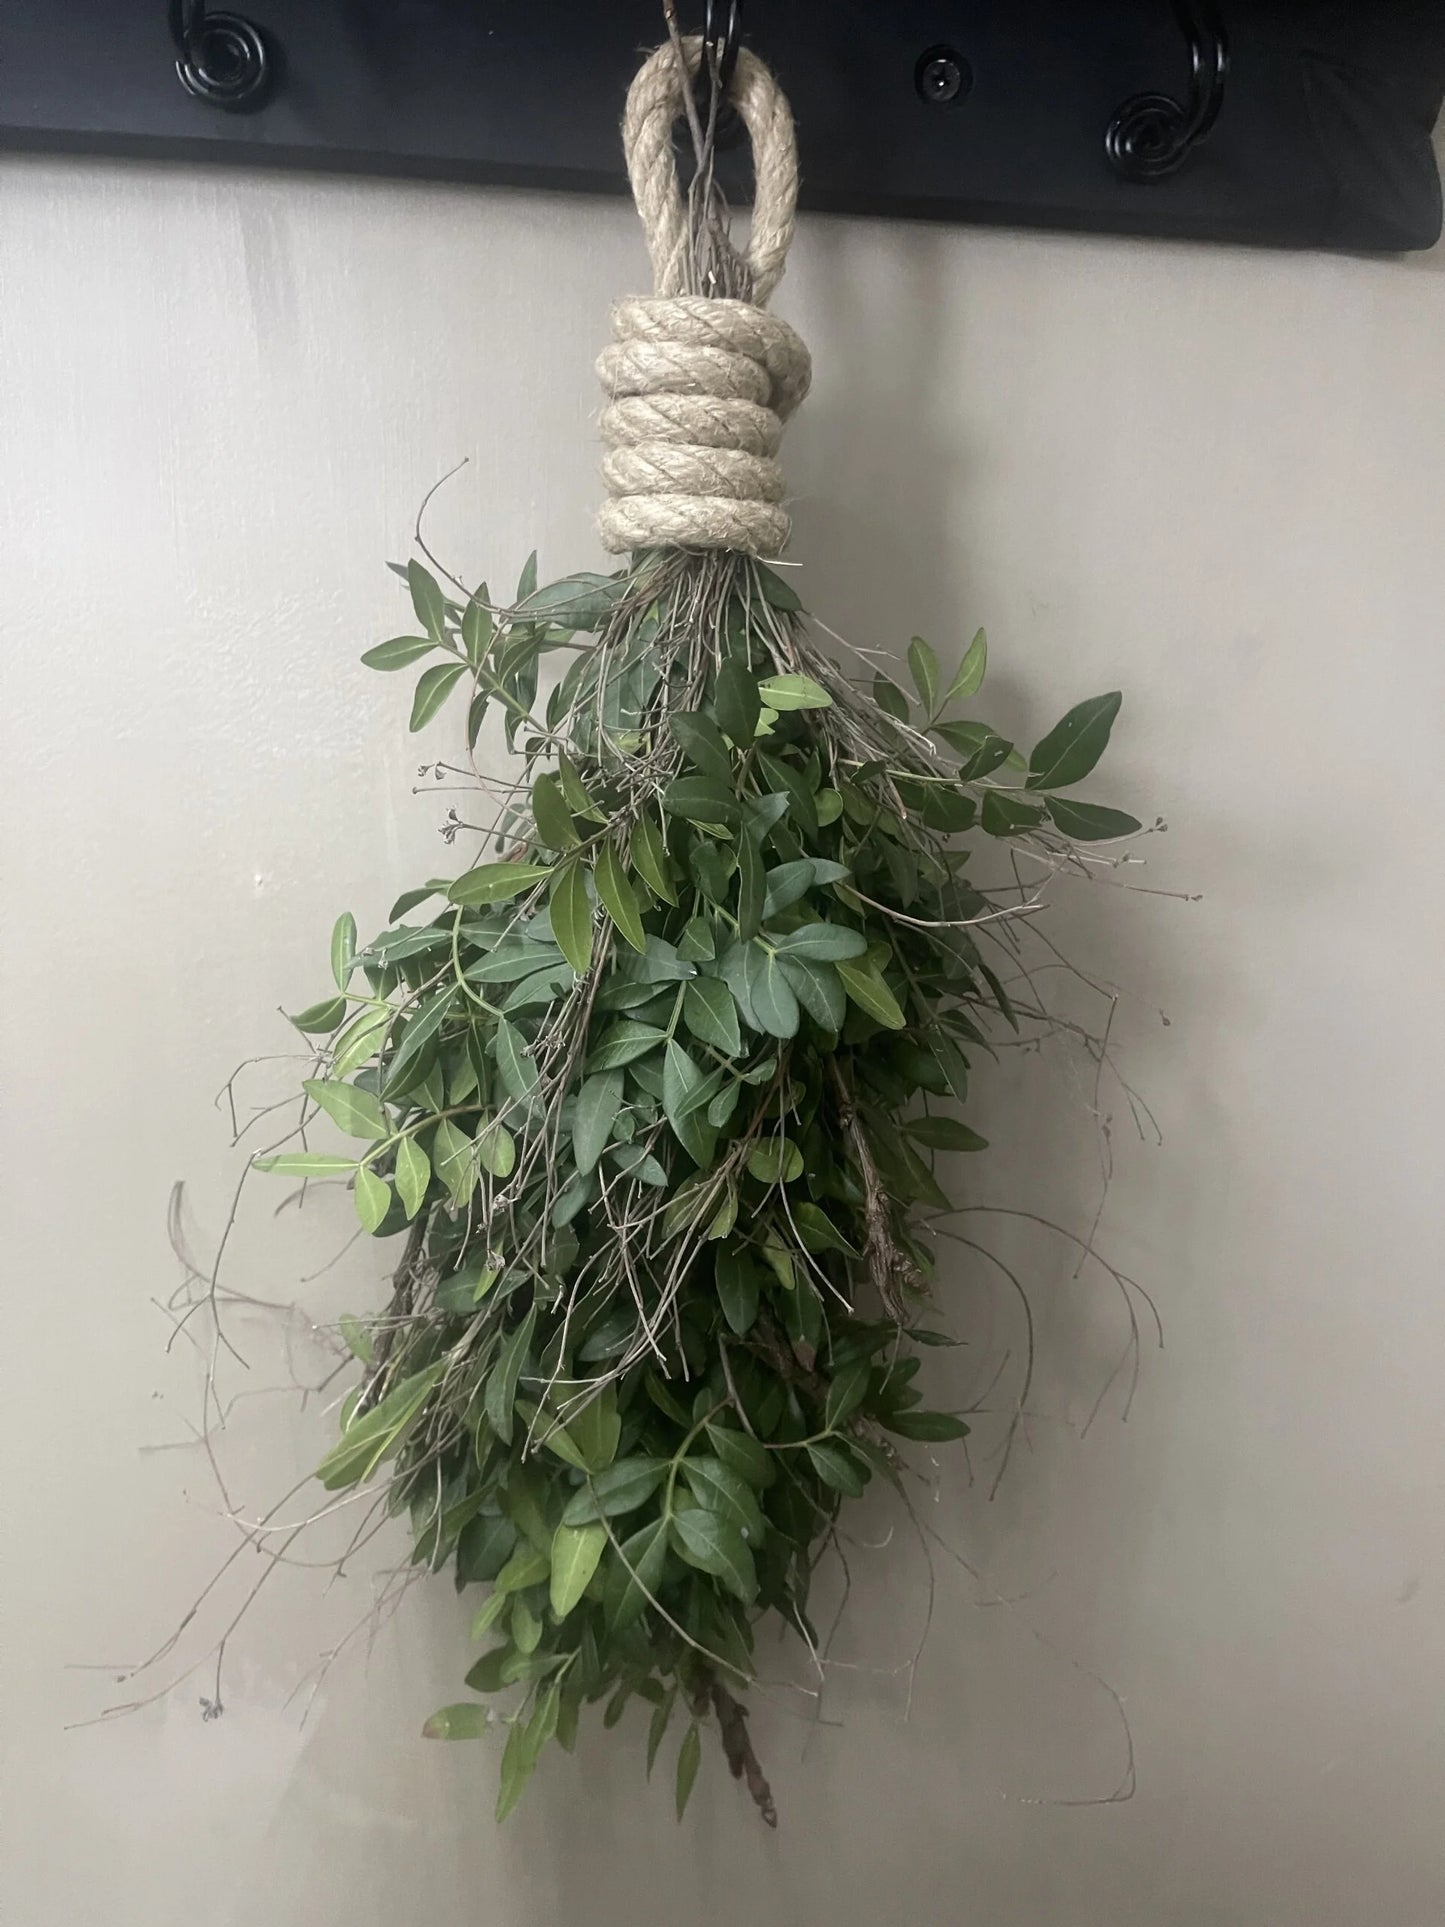 Tuft pistachio with rope loop